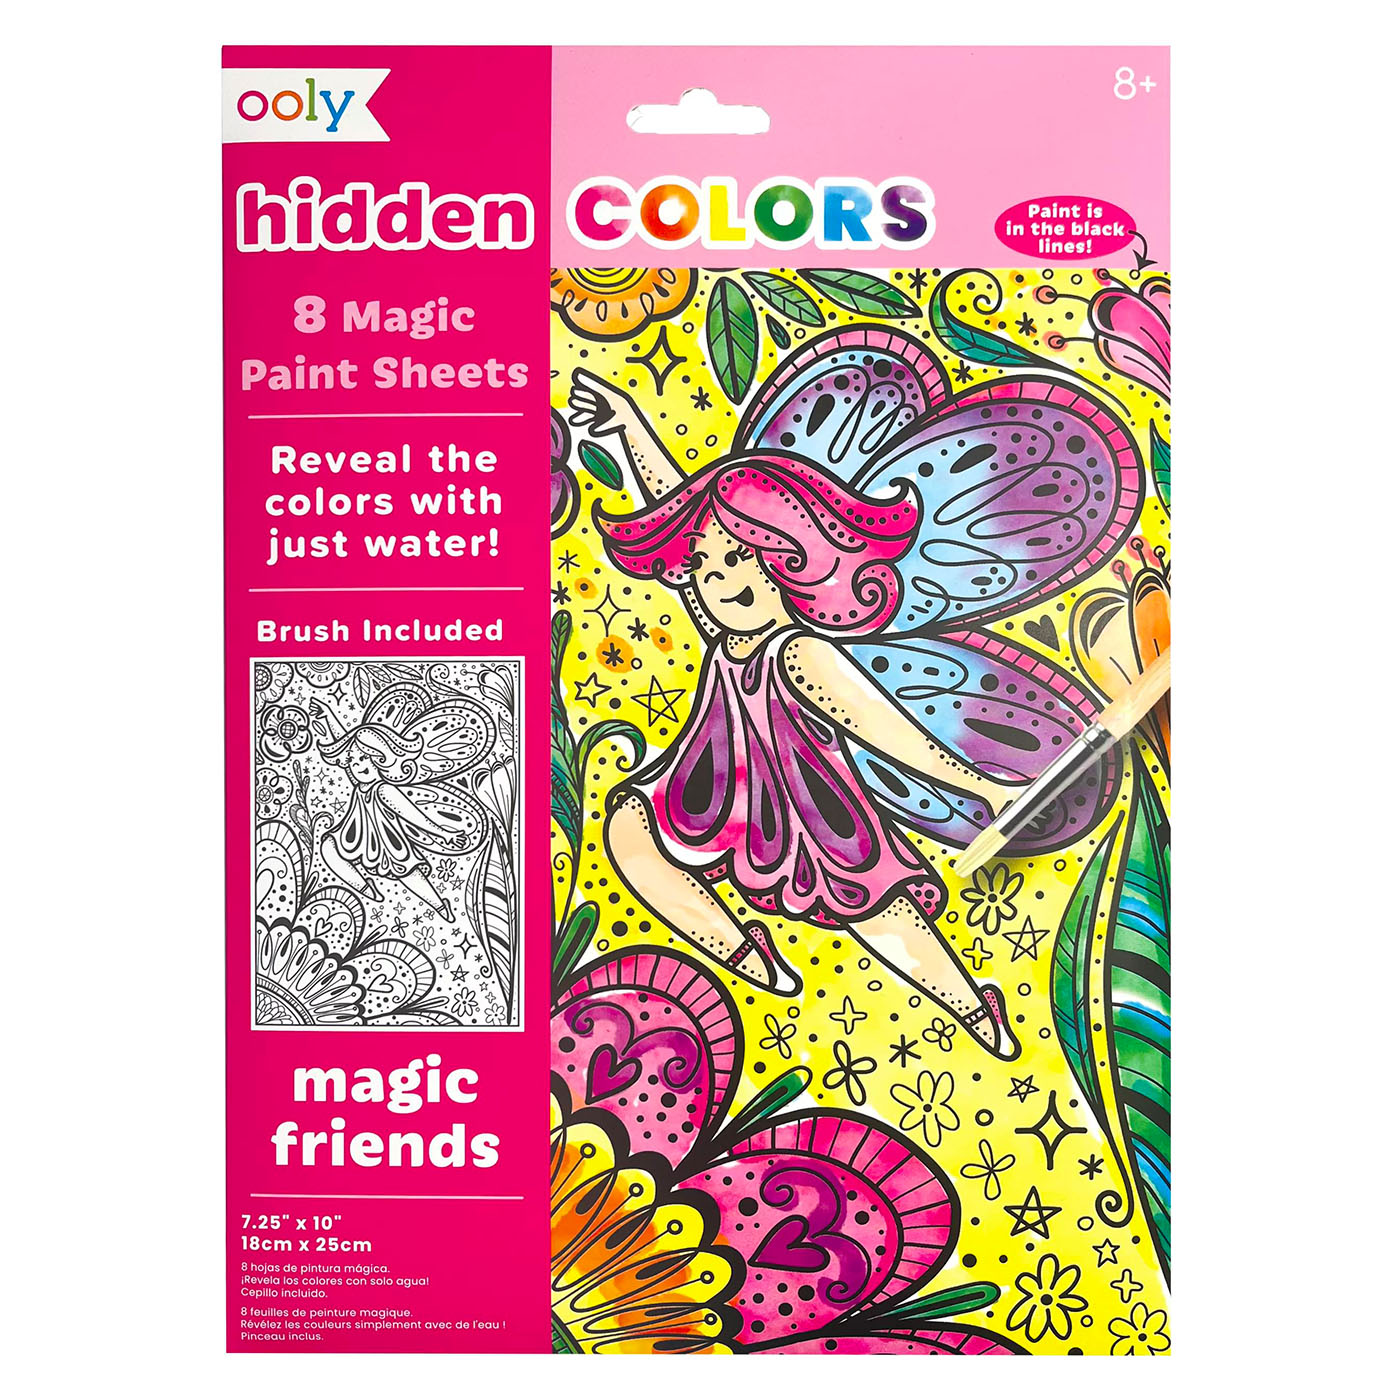 OOLY Ooly Hidden Colors Magic Paint Boyama Seti - Magic Friends